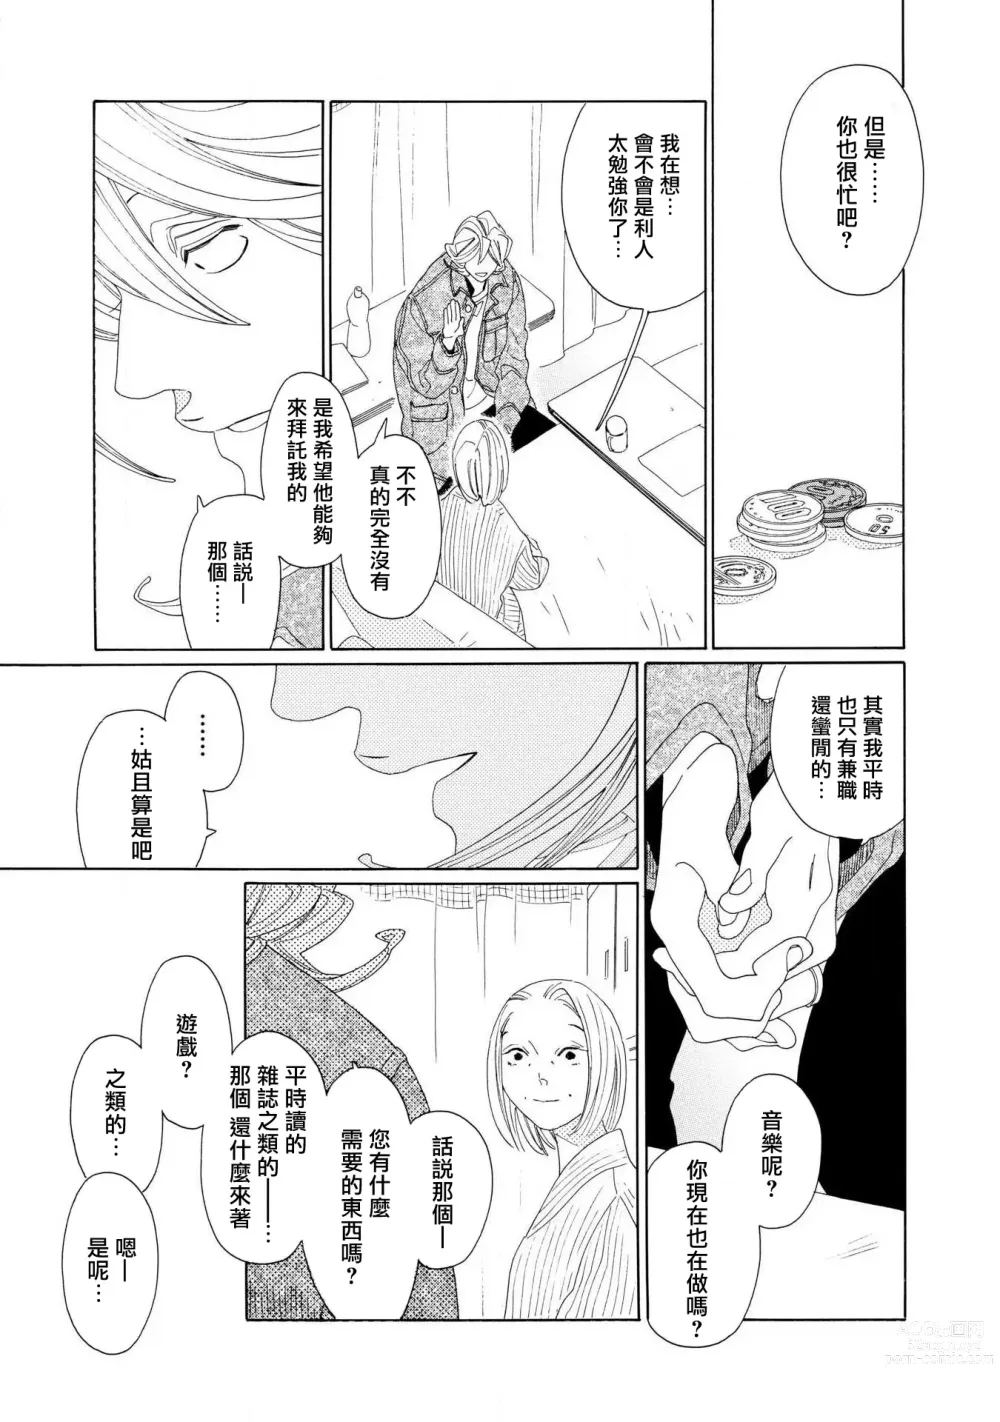 Page 4 of manga blanc #5-6